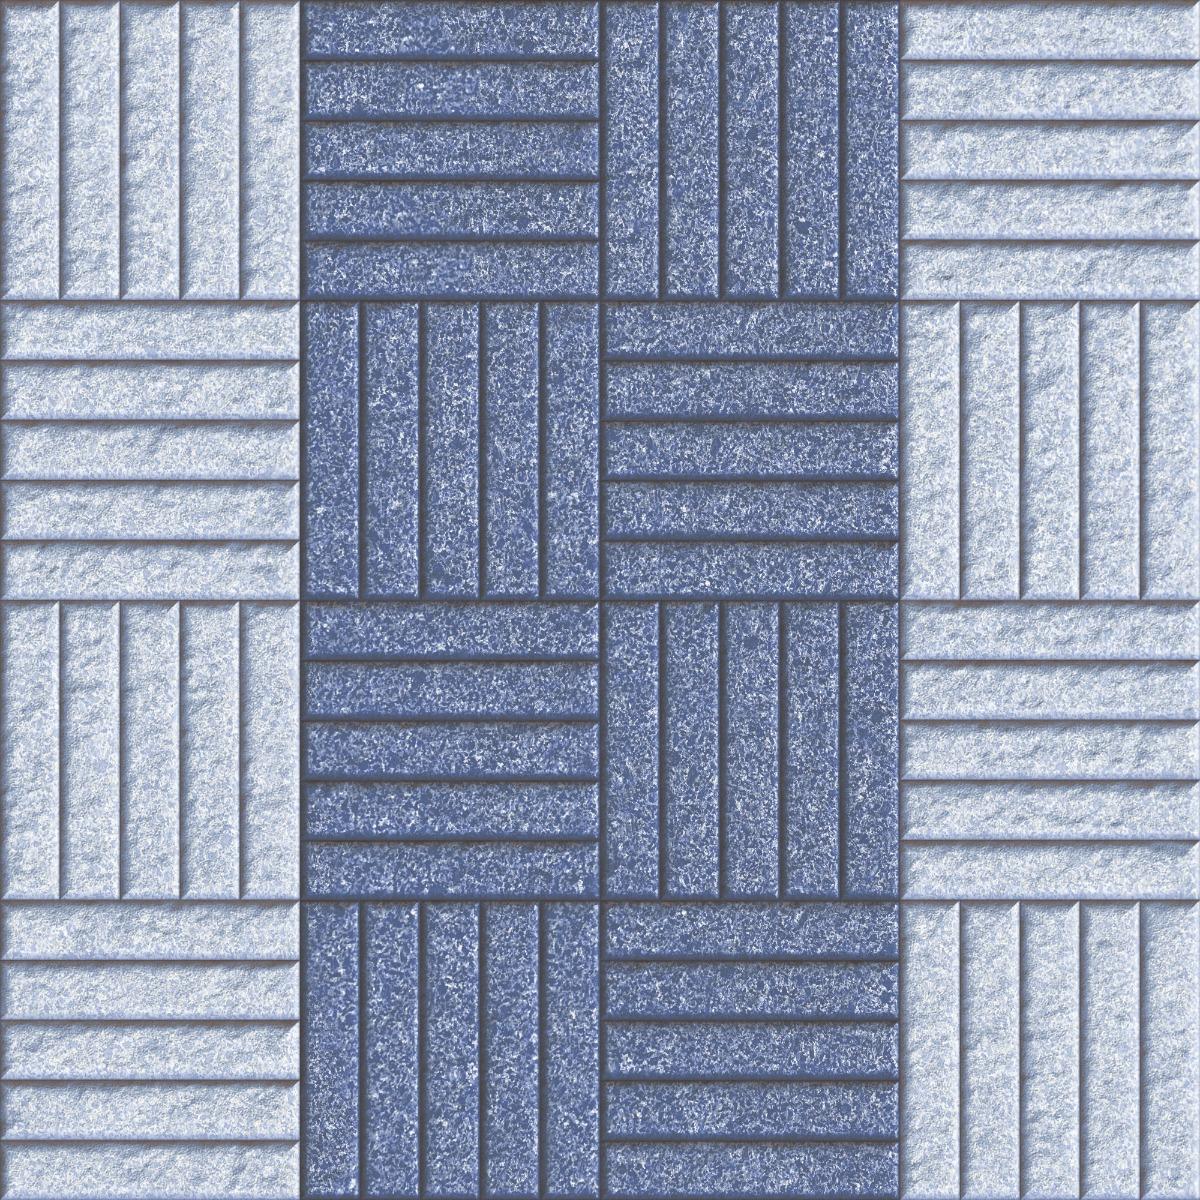 All Tiles for Commercial Tiles, Parking Tiles, Office Tiles, Pathway Tiles, Hospital Tiles, High Traffic Tiles, Bar/Restaurant, Outdoor Area, Porch/Parking